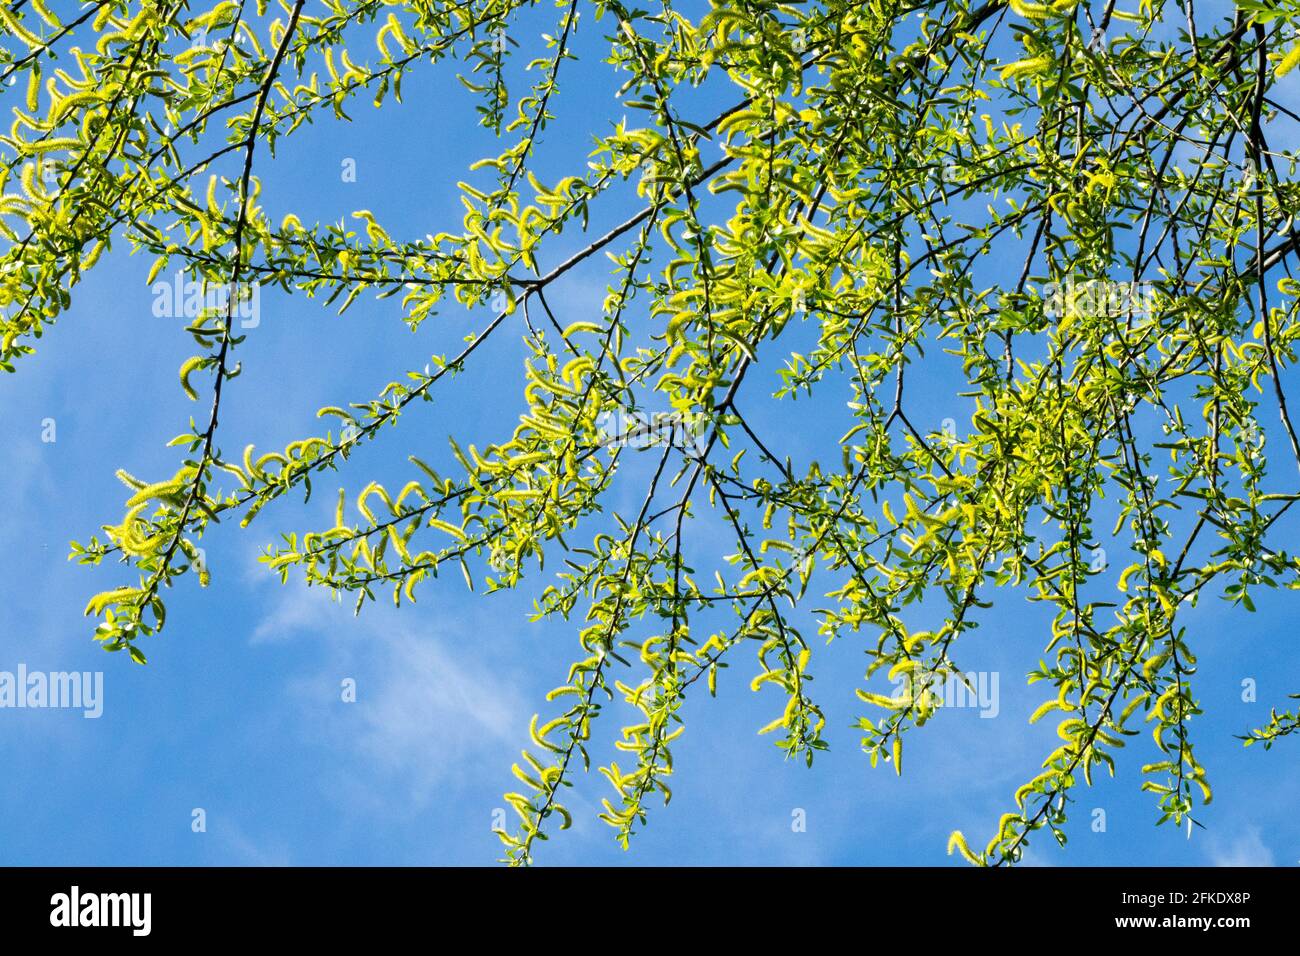 Gattini salici fragili rami Salix fragilis salice crepe primaverili ramoscelli contro cielo blu salice agrumi rami di salice fragili piante polline primaverili Foto Stock